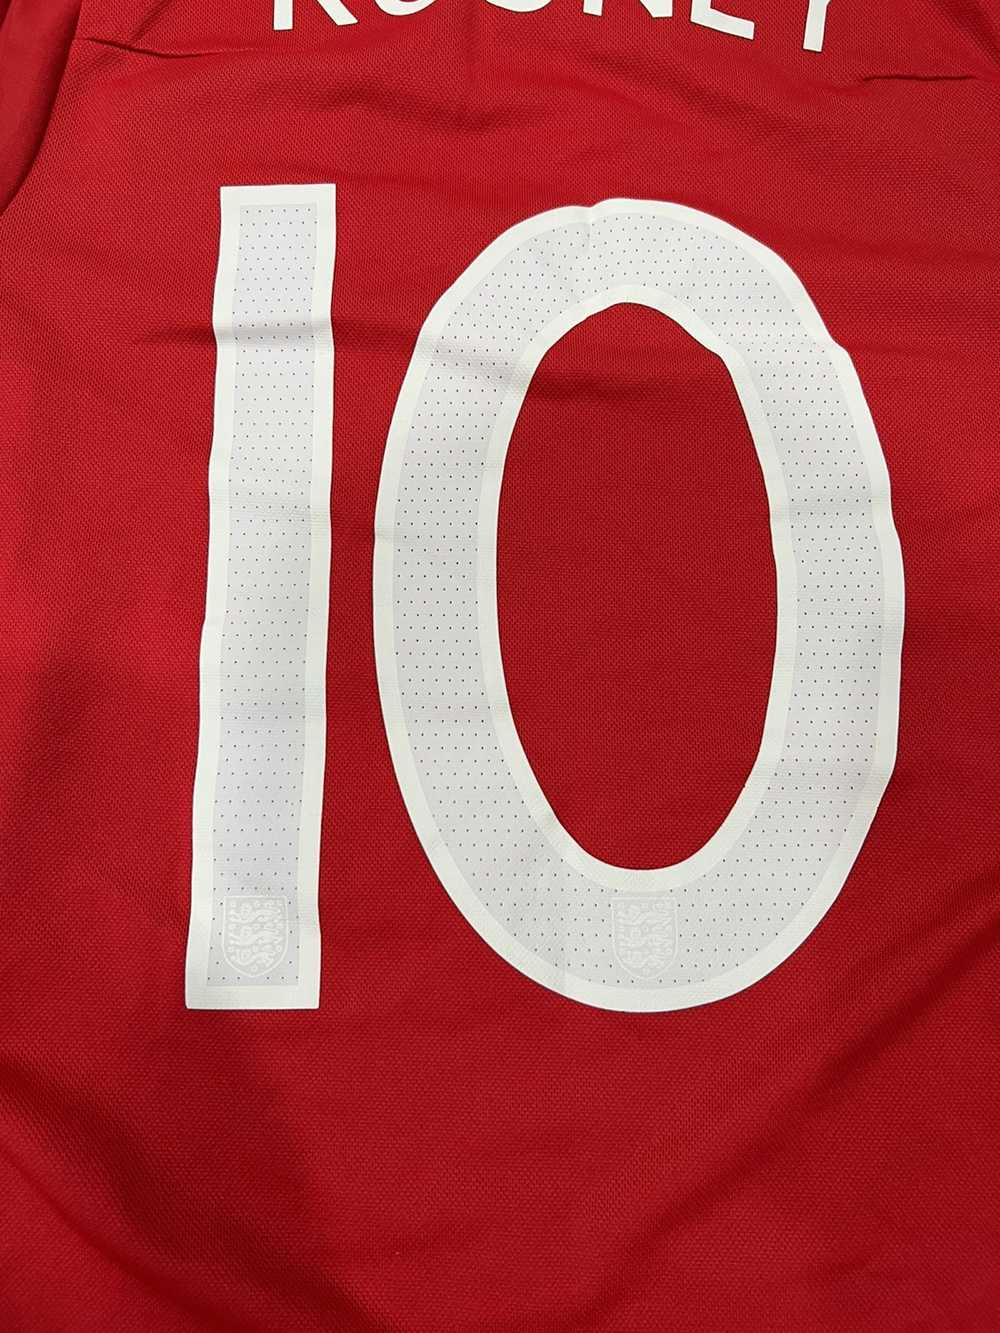 Umbro Umbro England Jersey / Kith Wayne Rooney - image 3